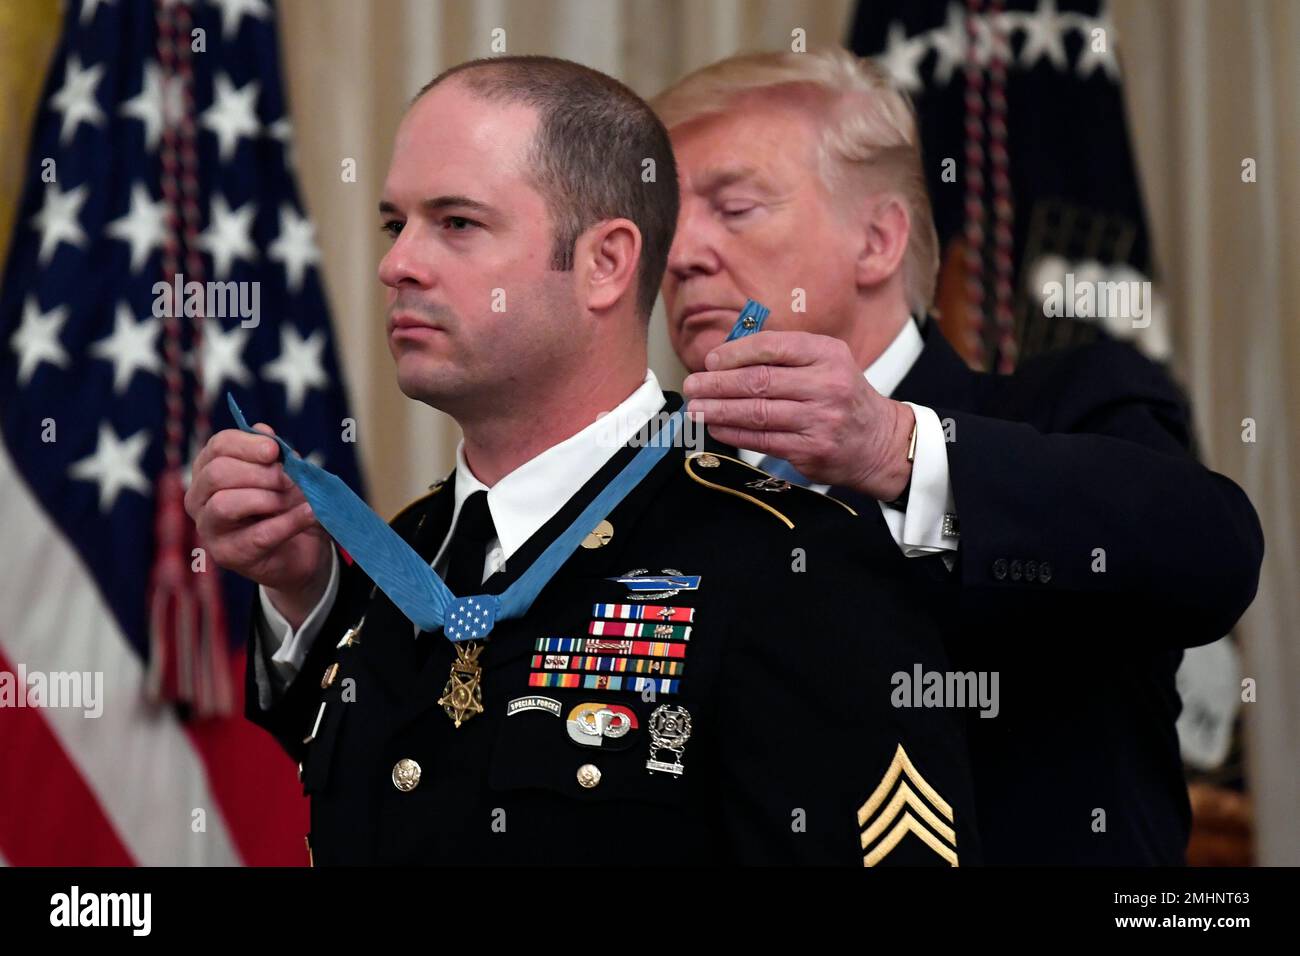 President Donald Trump, right, presents Army Master Sgt. Matthew ...